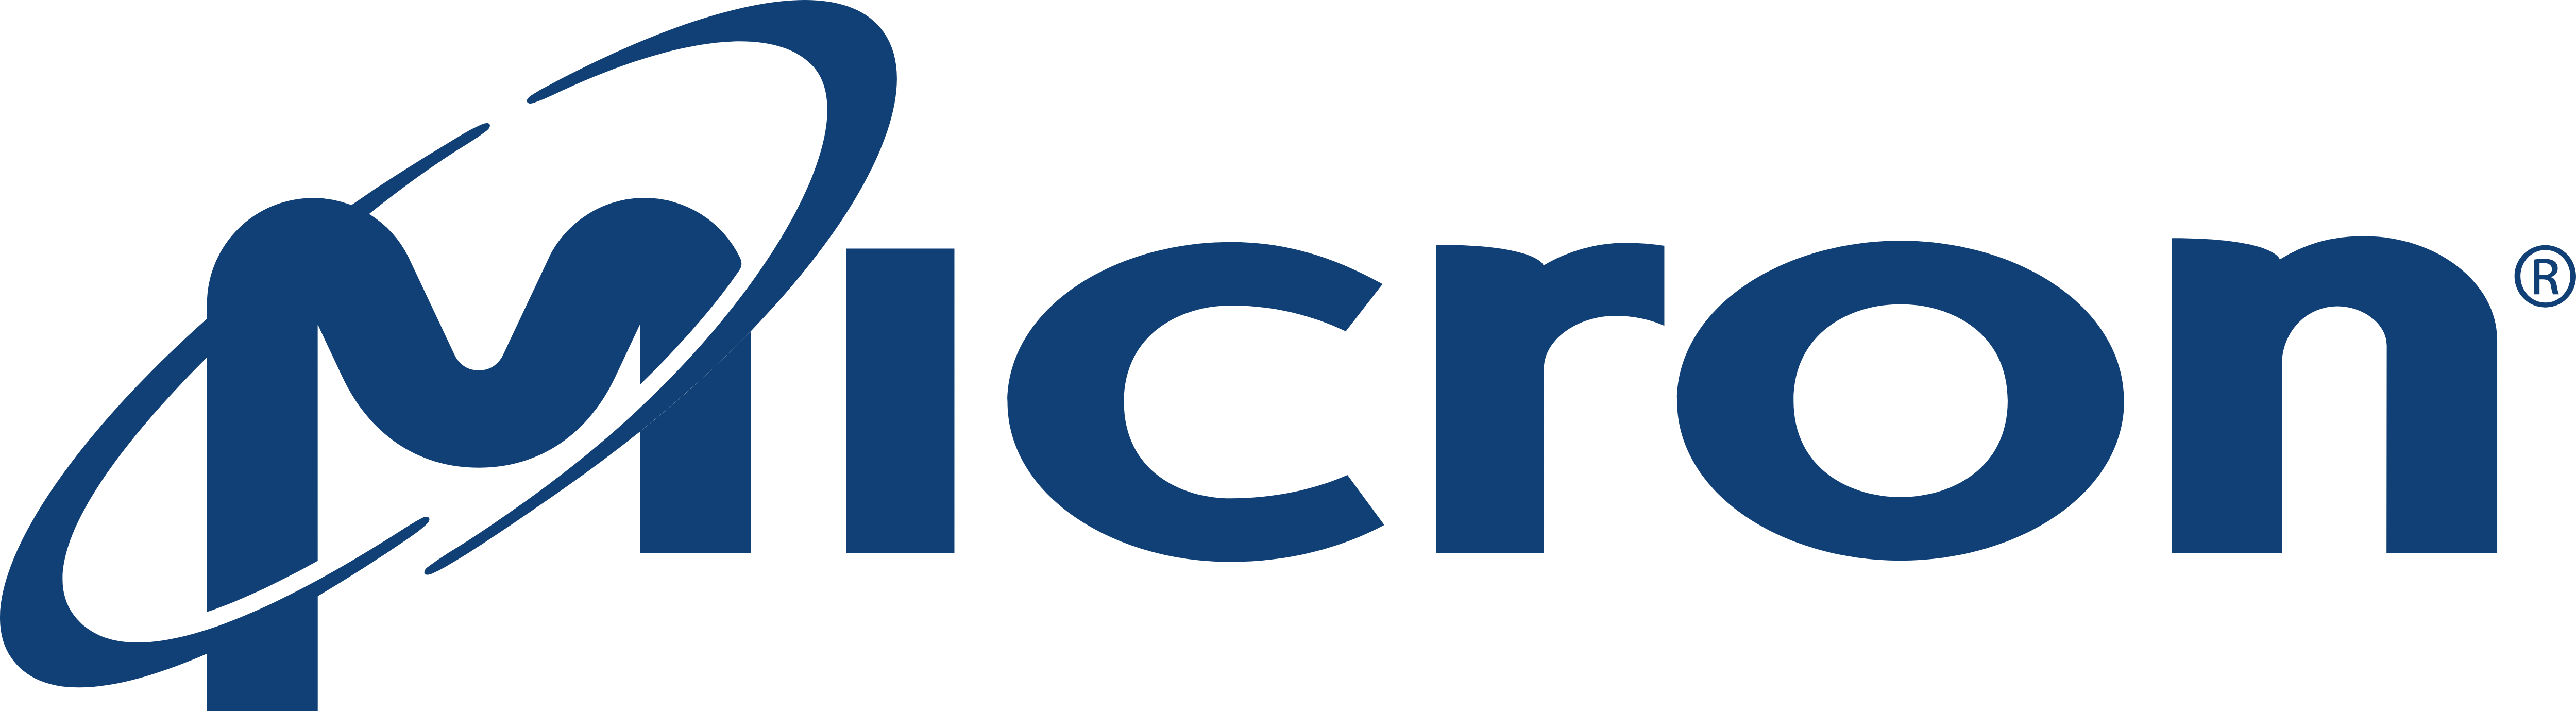 Technology clipart technology logo. Micron logos download 